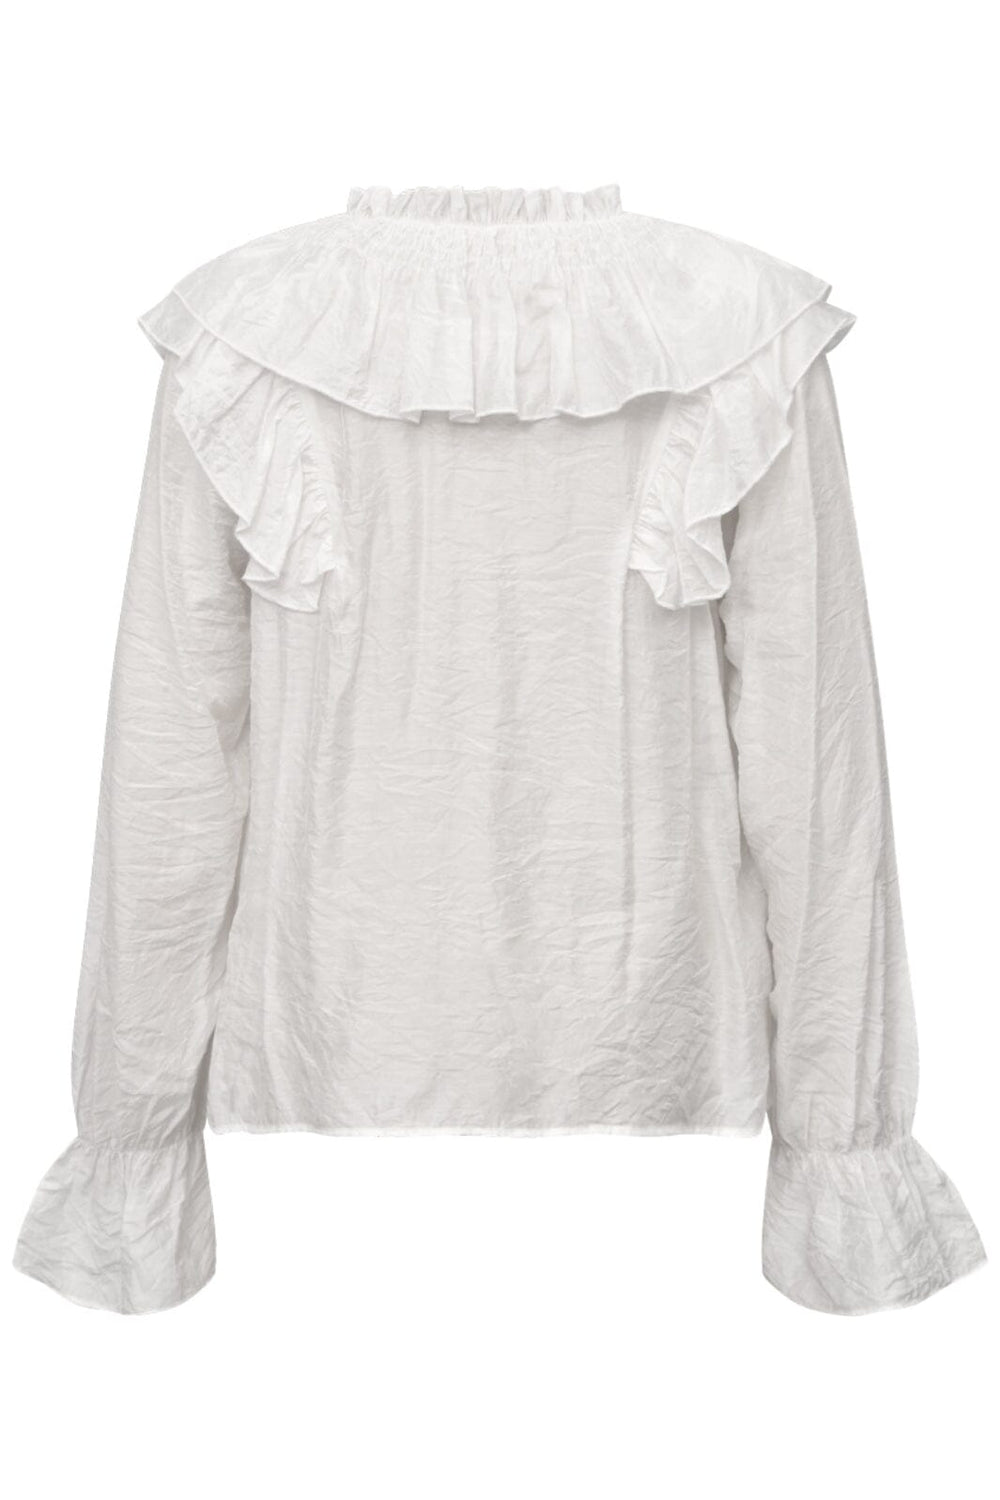 Gossia - Anglago Blouse - Off-white Skjorter 